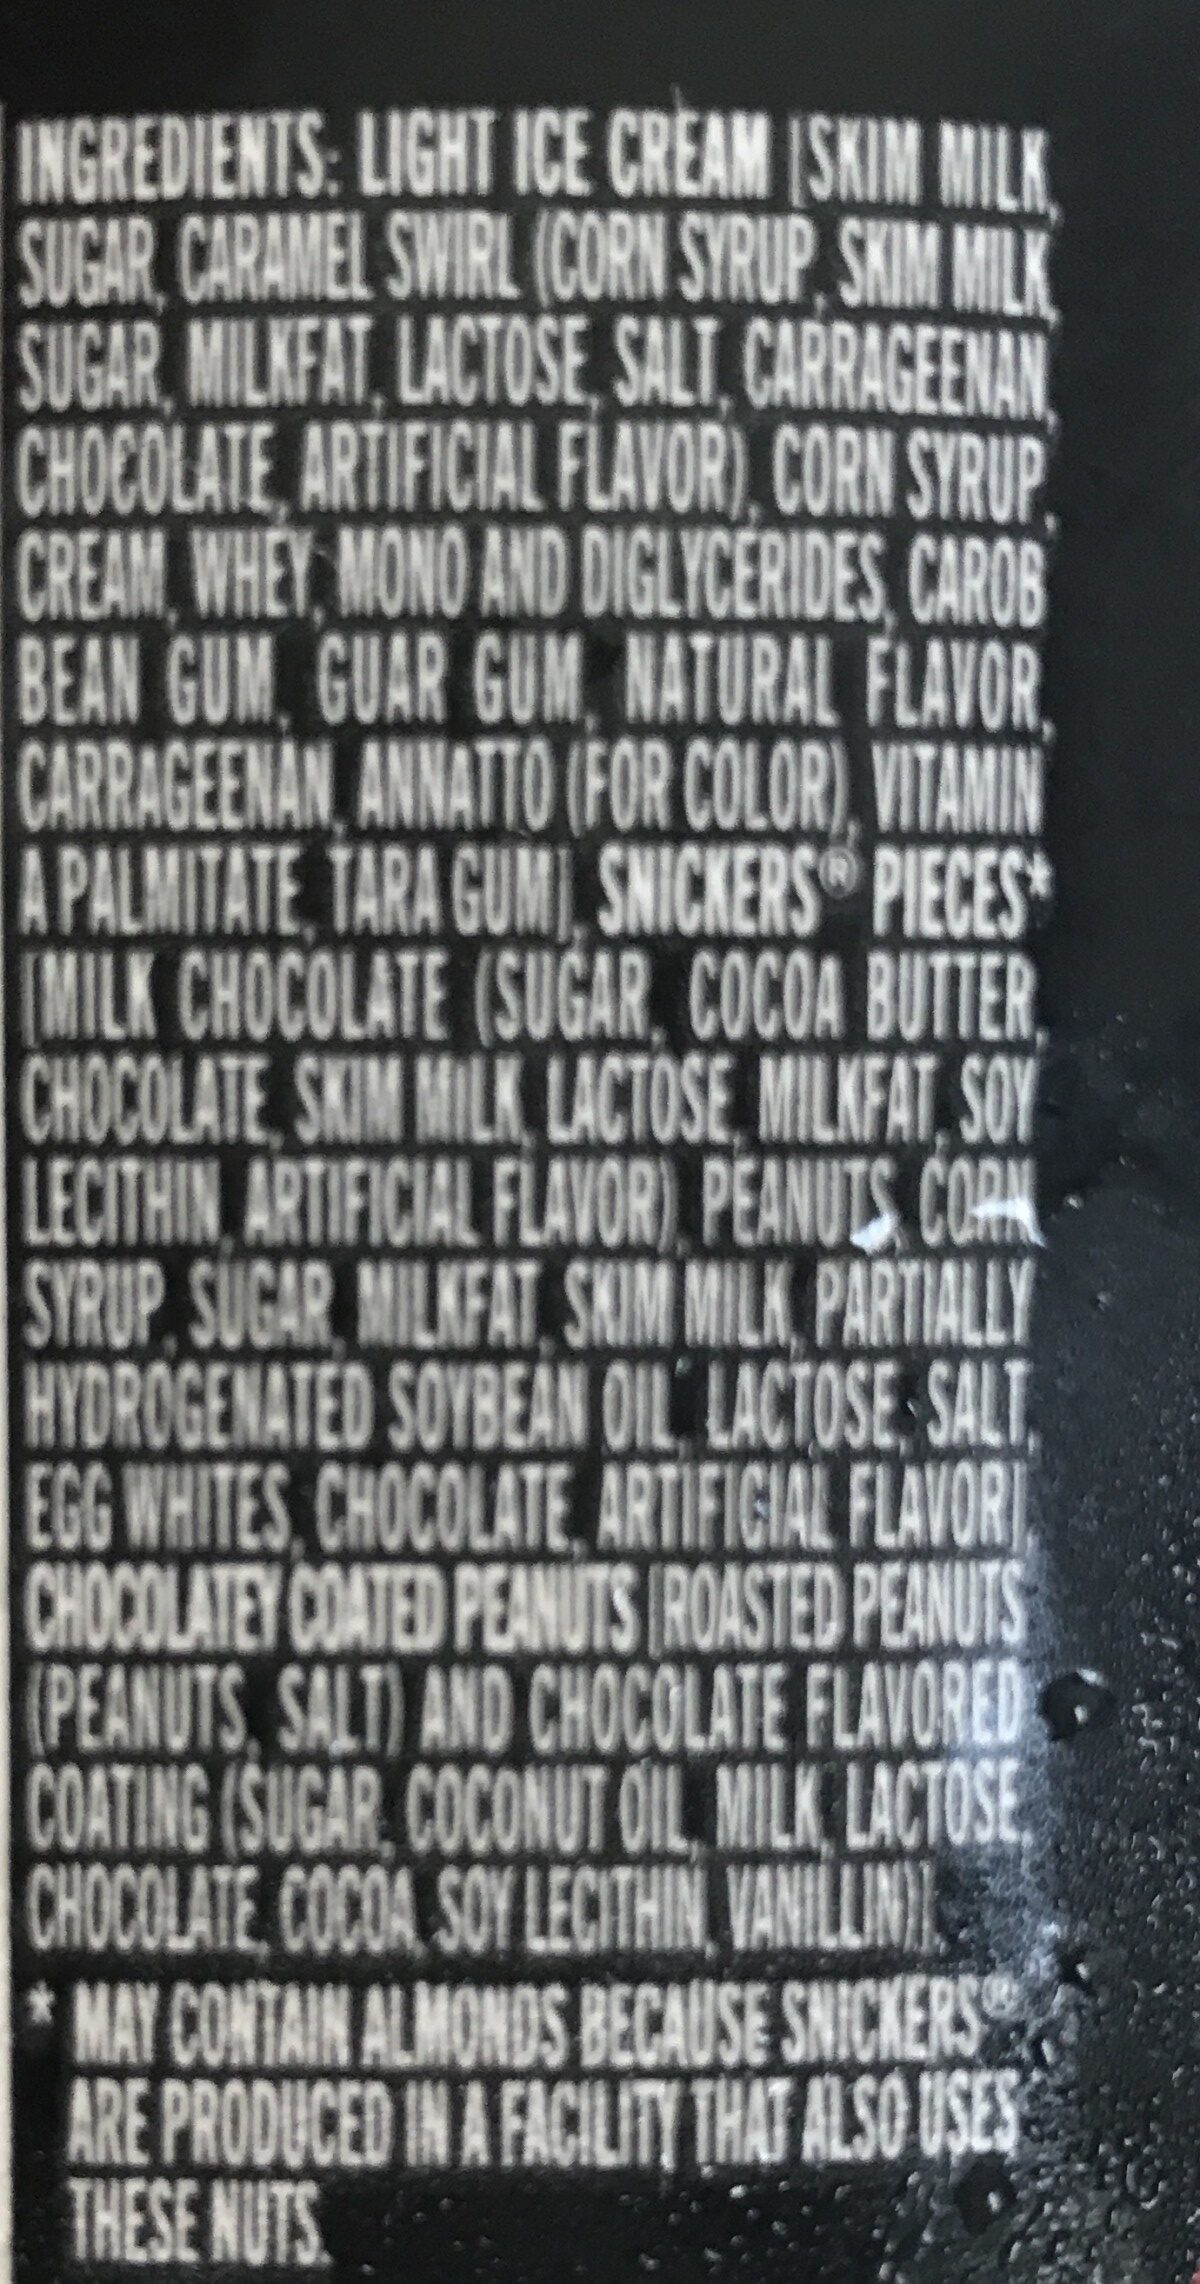 Snickers Ice Cream - Ingredients